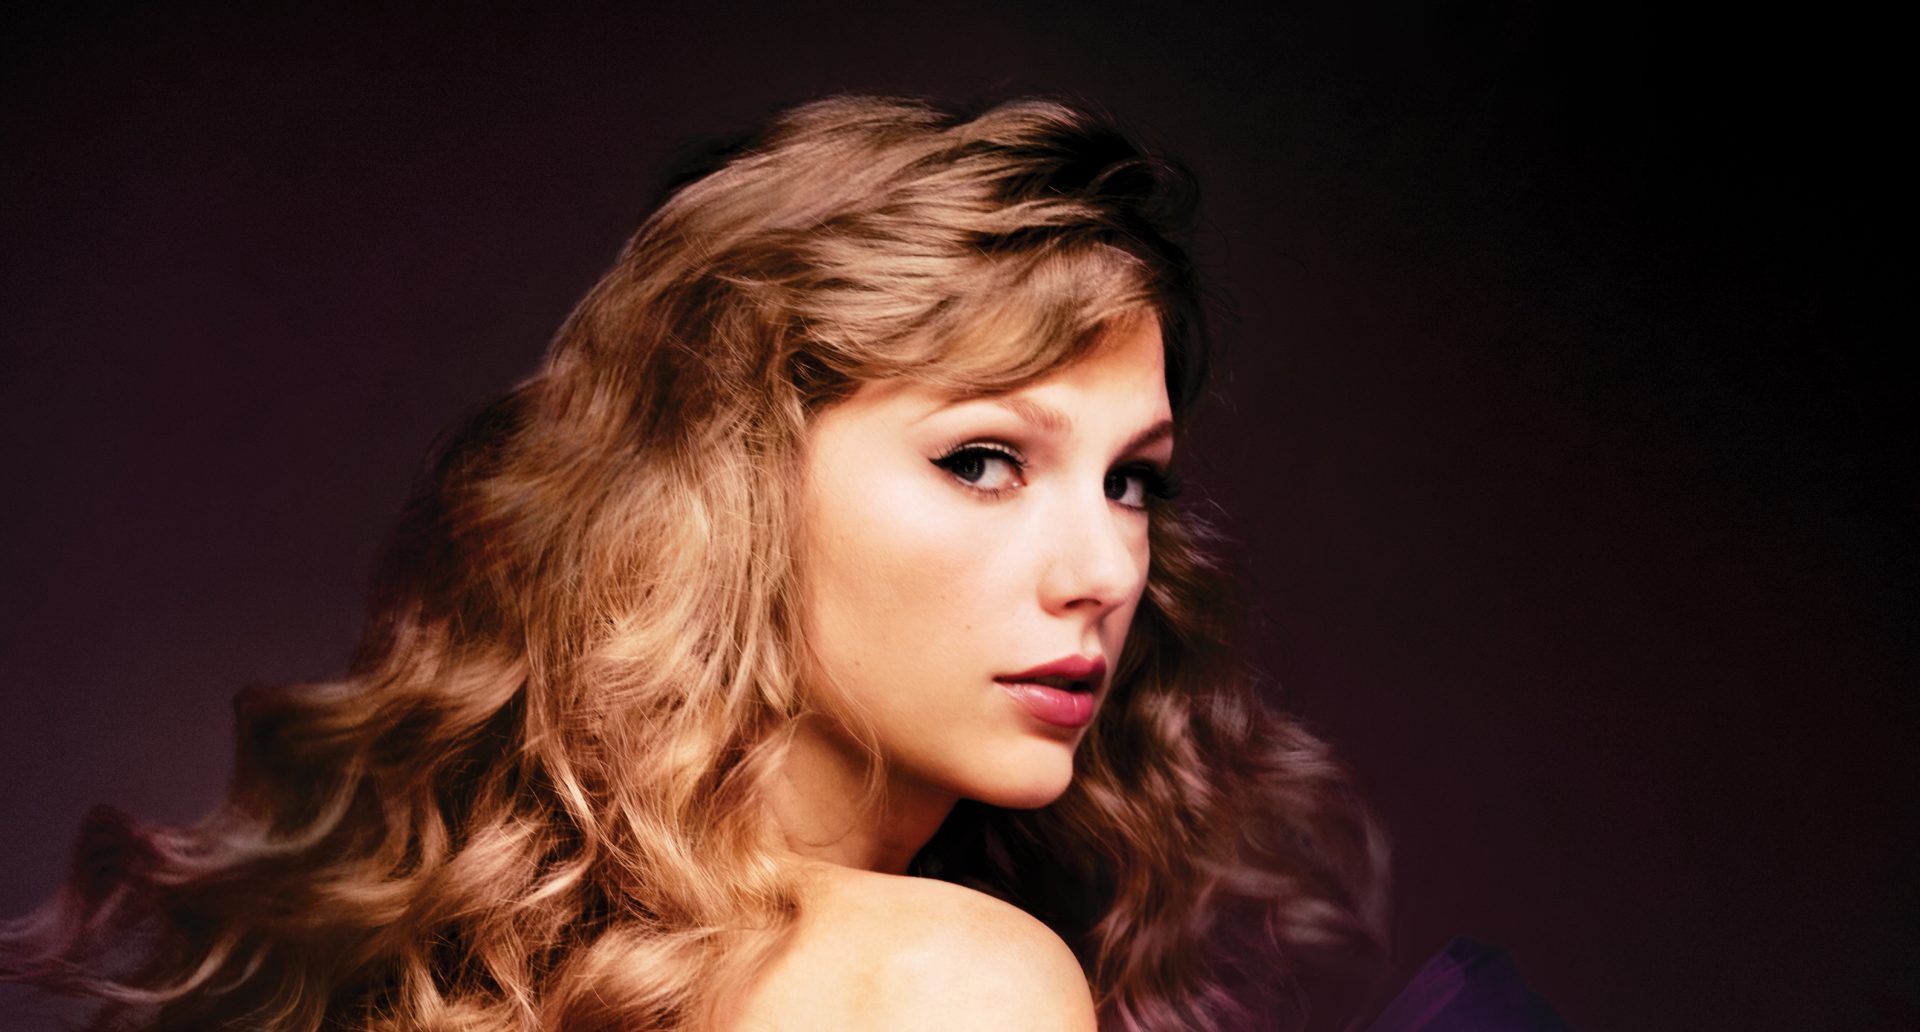 Taylor Swift fará 5 shows no Brasil, em setembro e novembro - Foto: Reprodução/Twitter @taylorswift13